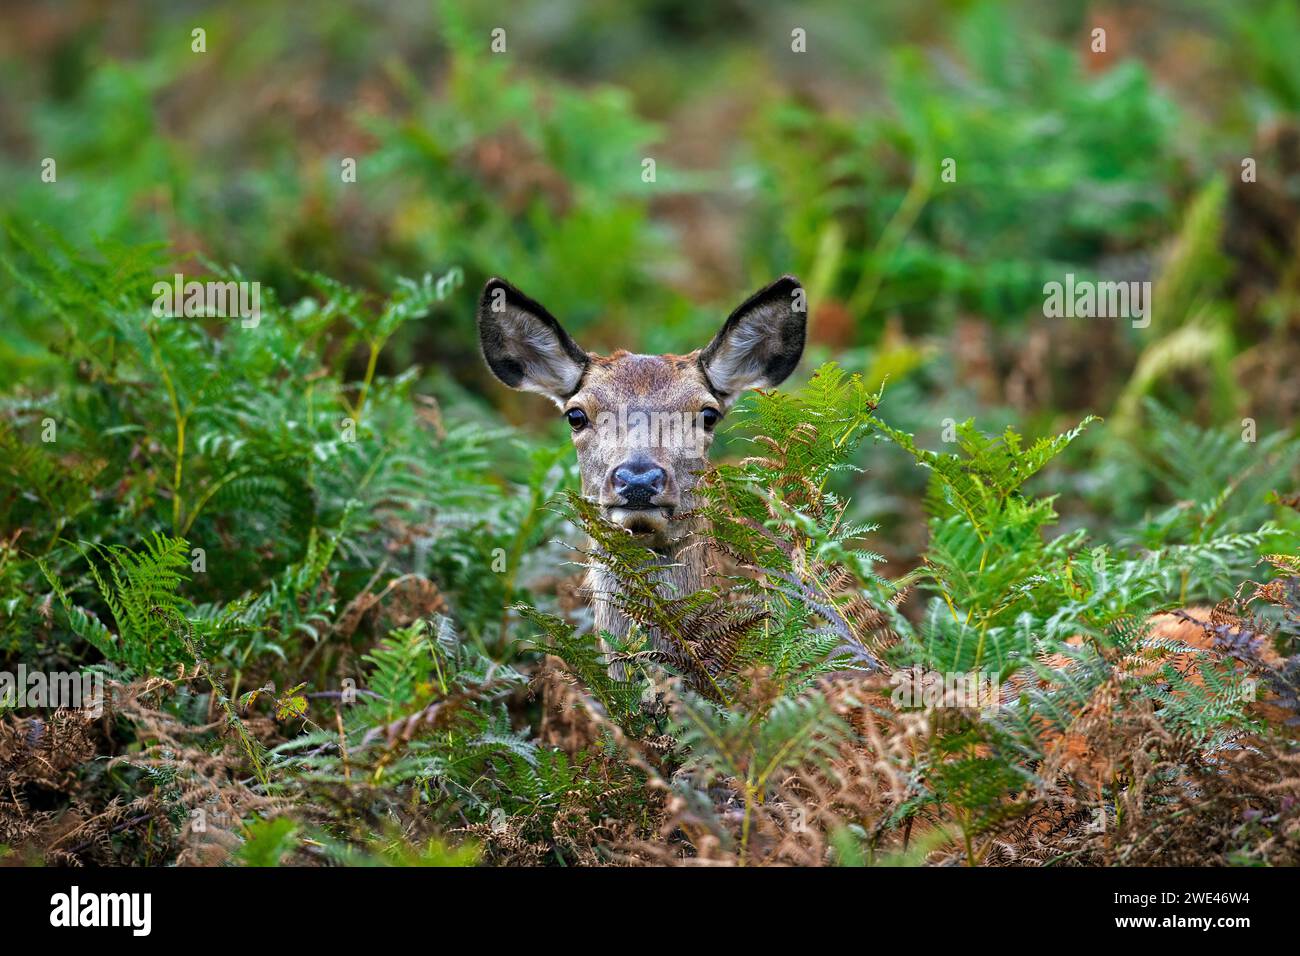 Red deer (Cervus elaphus) hind looking through bracken ferns in forest in autumn / fall Stock Photo